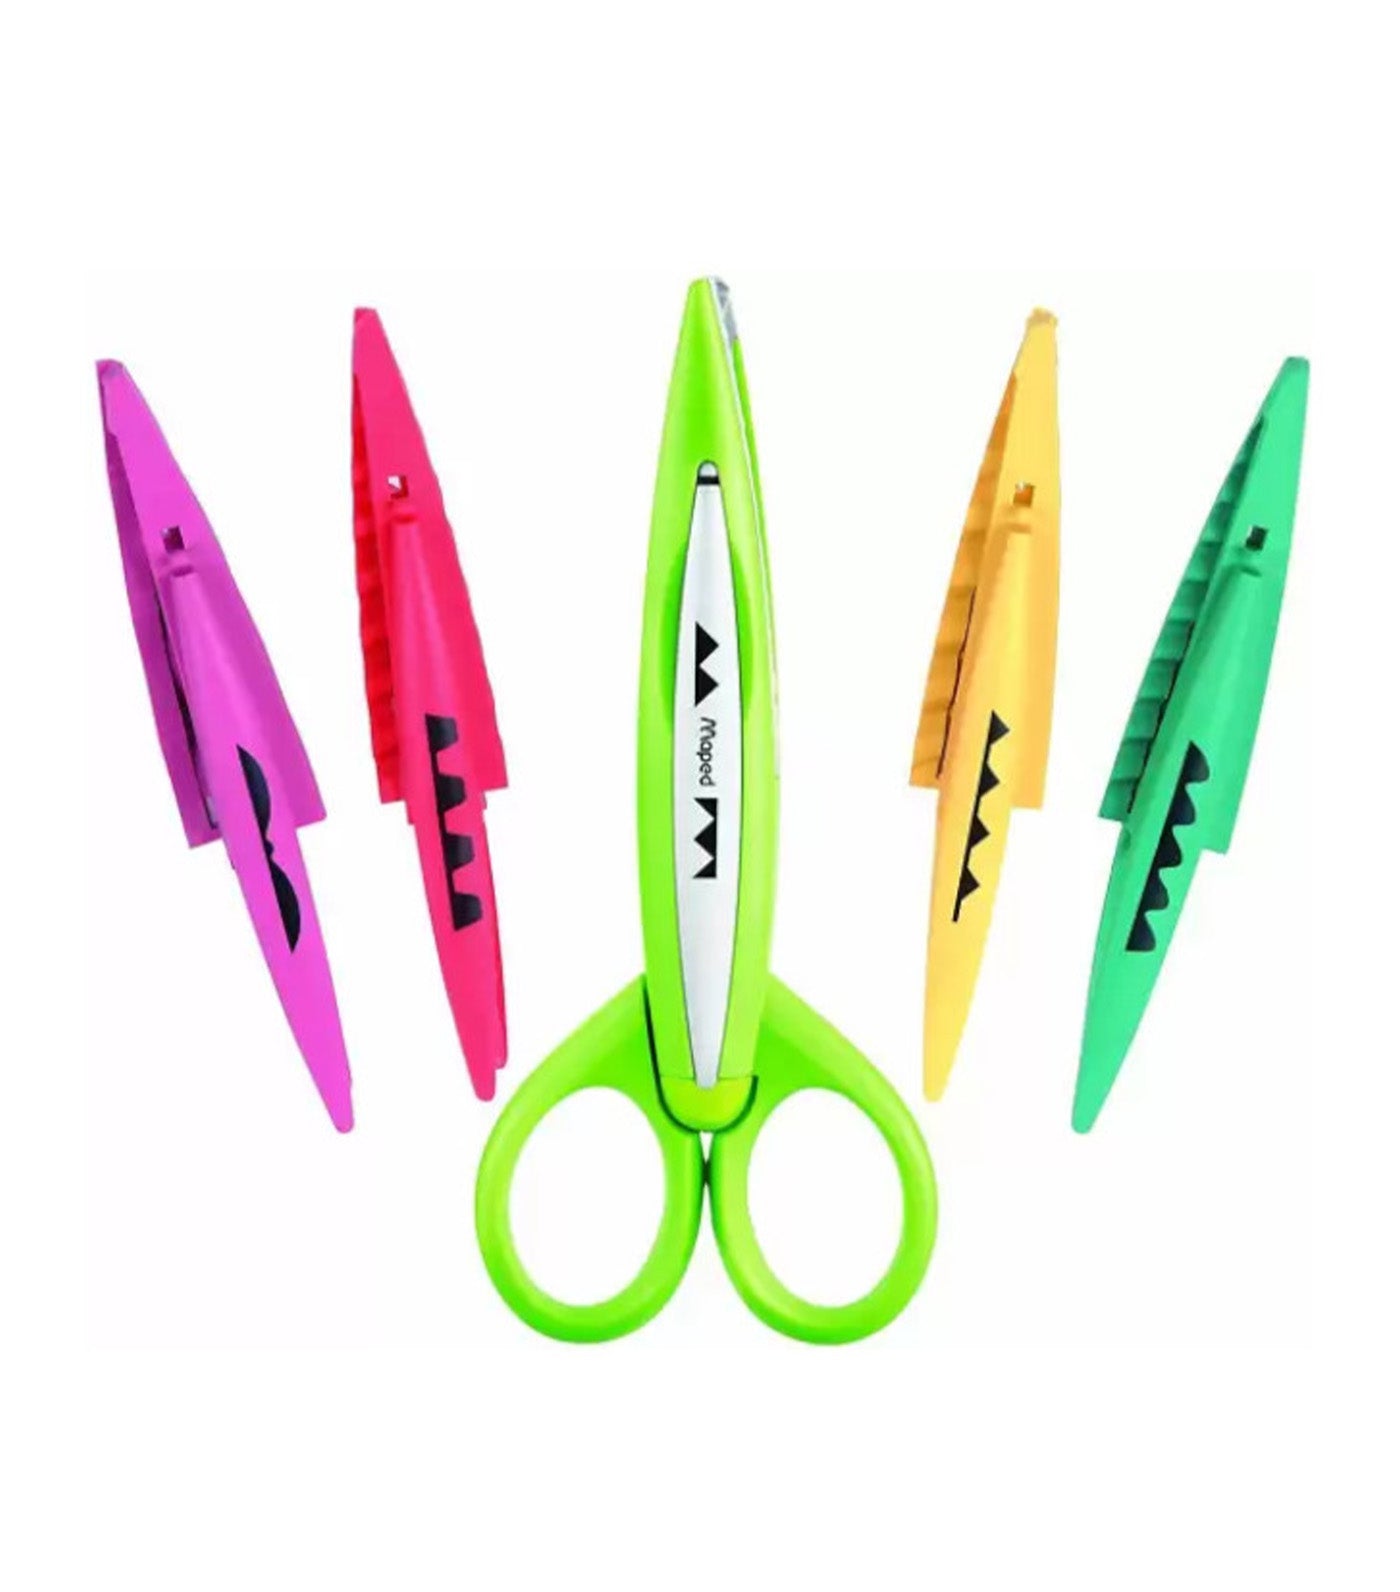 Crea Cut Craft Scissors - Pack of 5